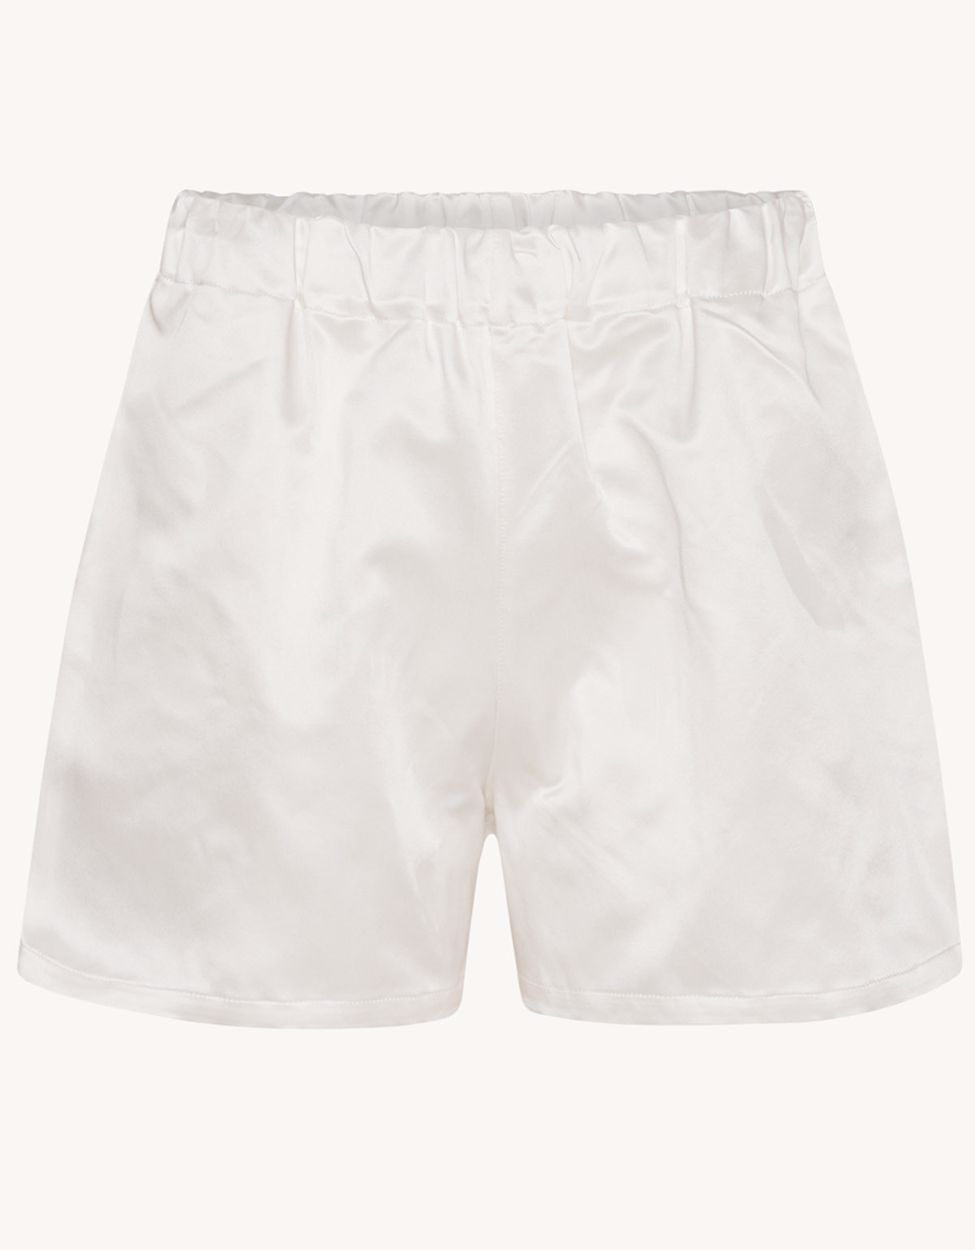 I Blame Lulu Twiggy Shorts - White Satin